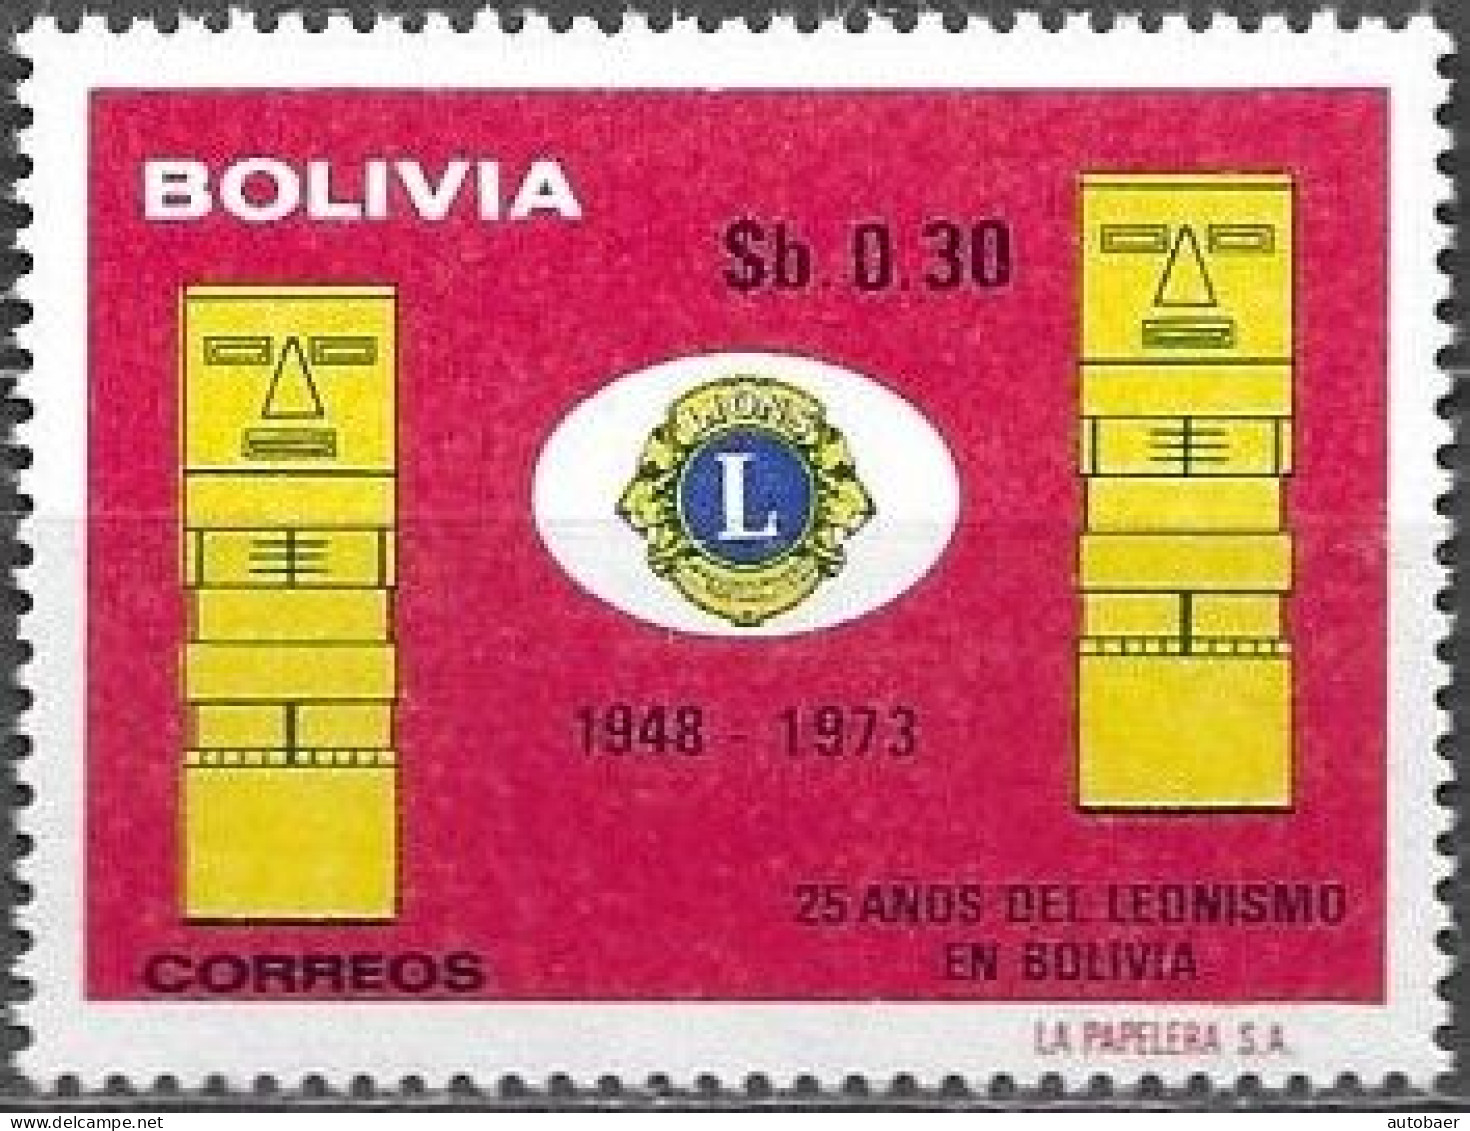 Bolivia Bolivie Bolivien 1975 25 Years Lions Club Leonismo Michel No. 872 MNH Mint Postfrisch Neuf ** - Bolivia